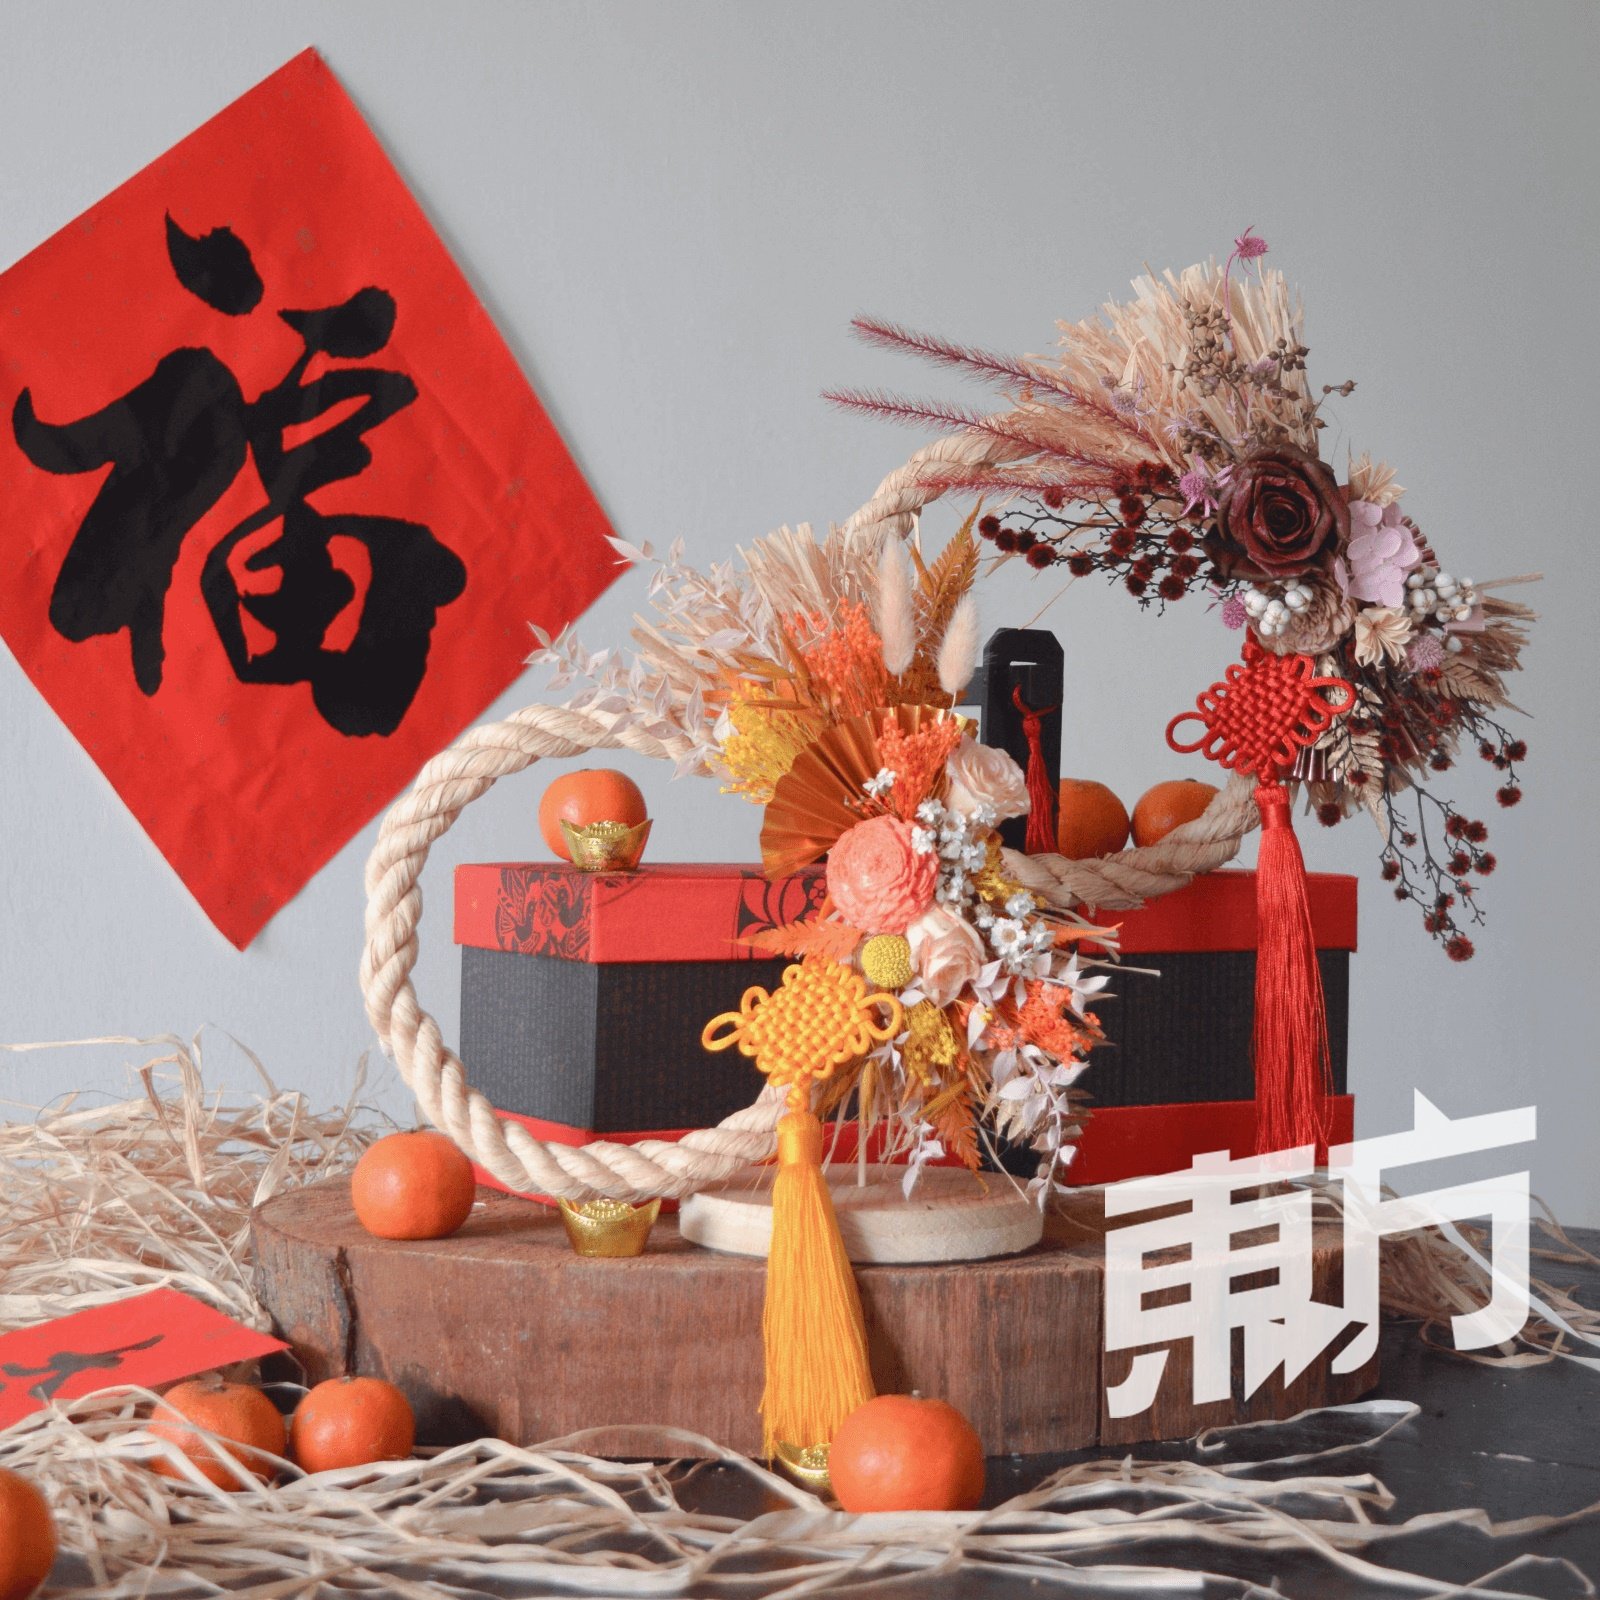 After Rain Florist春节花艺套组结合了中国结、花圈和神社绳结元素，将各种寓意好运降临的装饰融合其中。